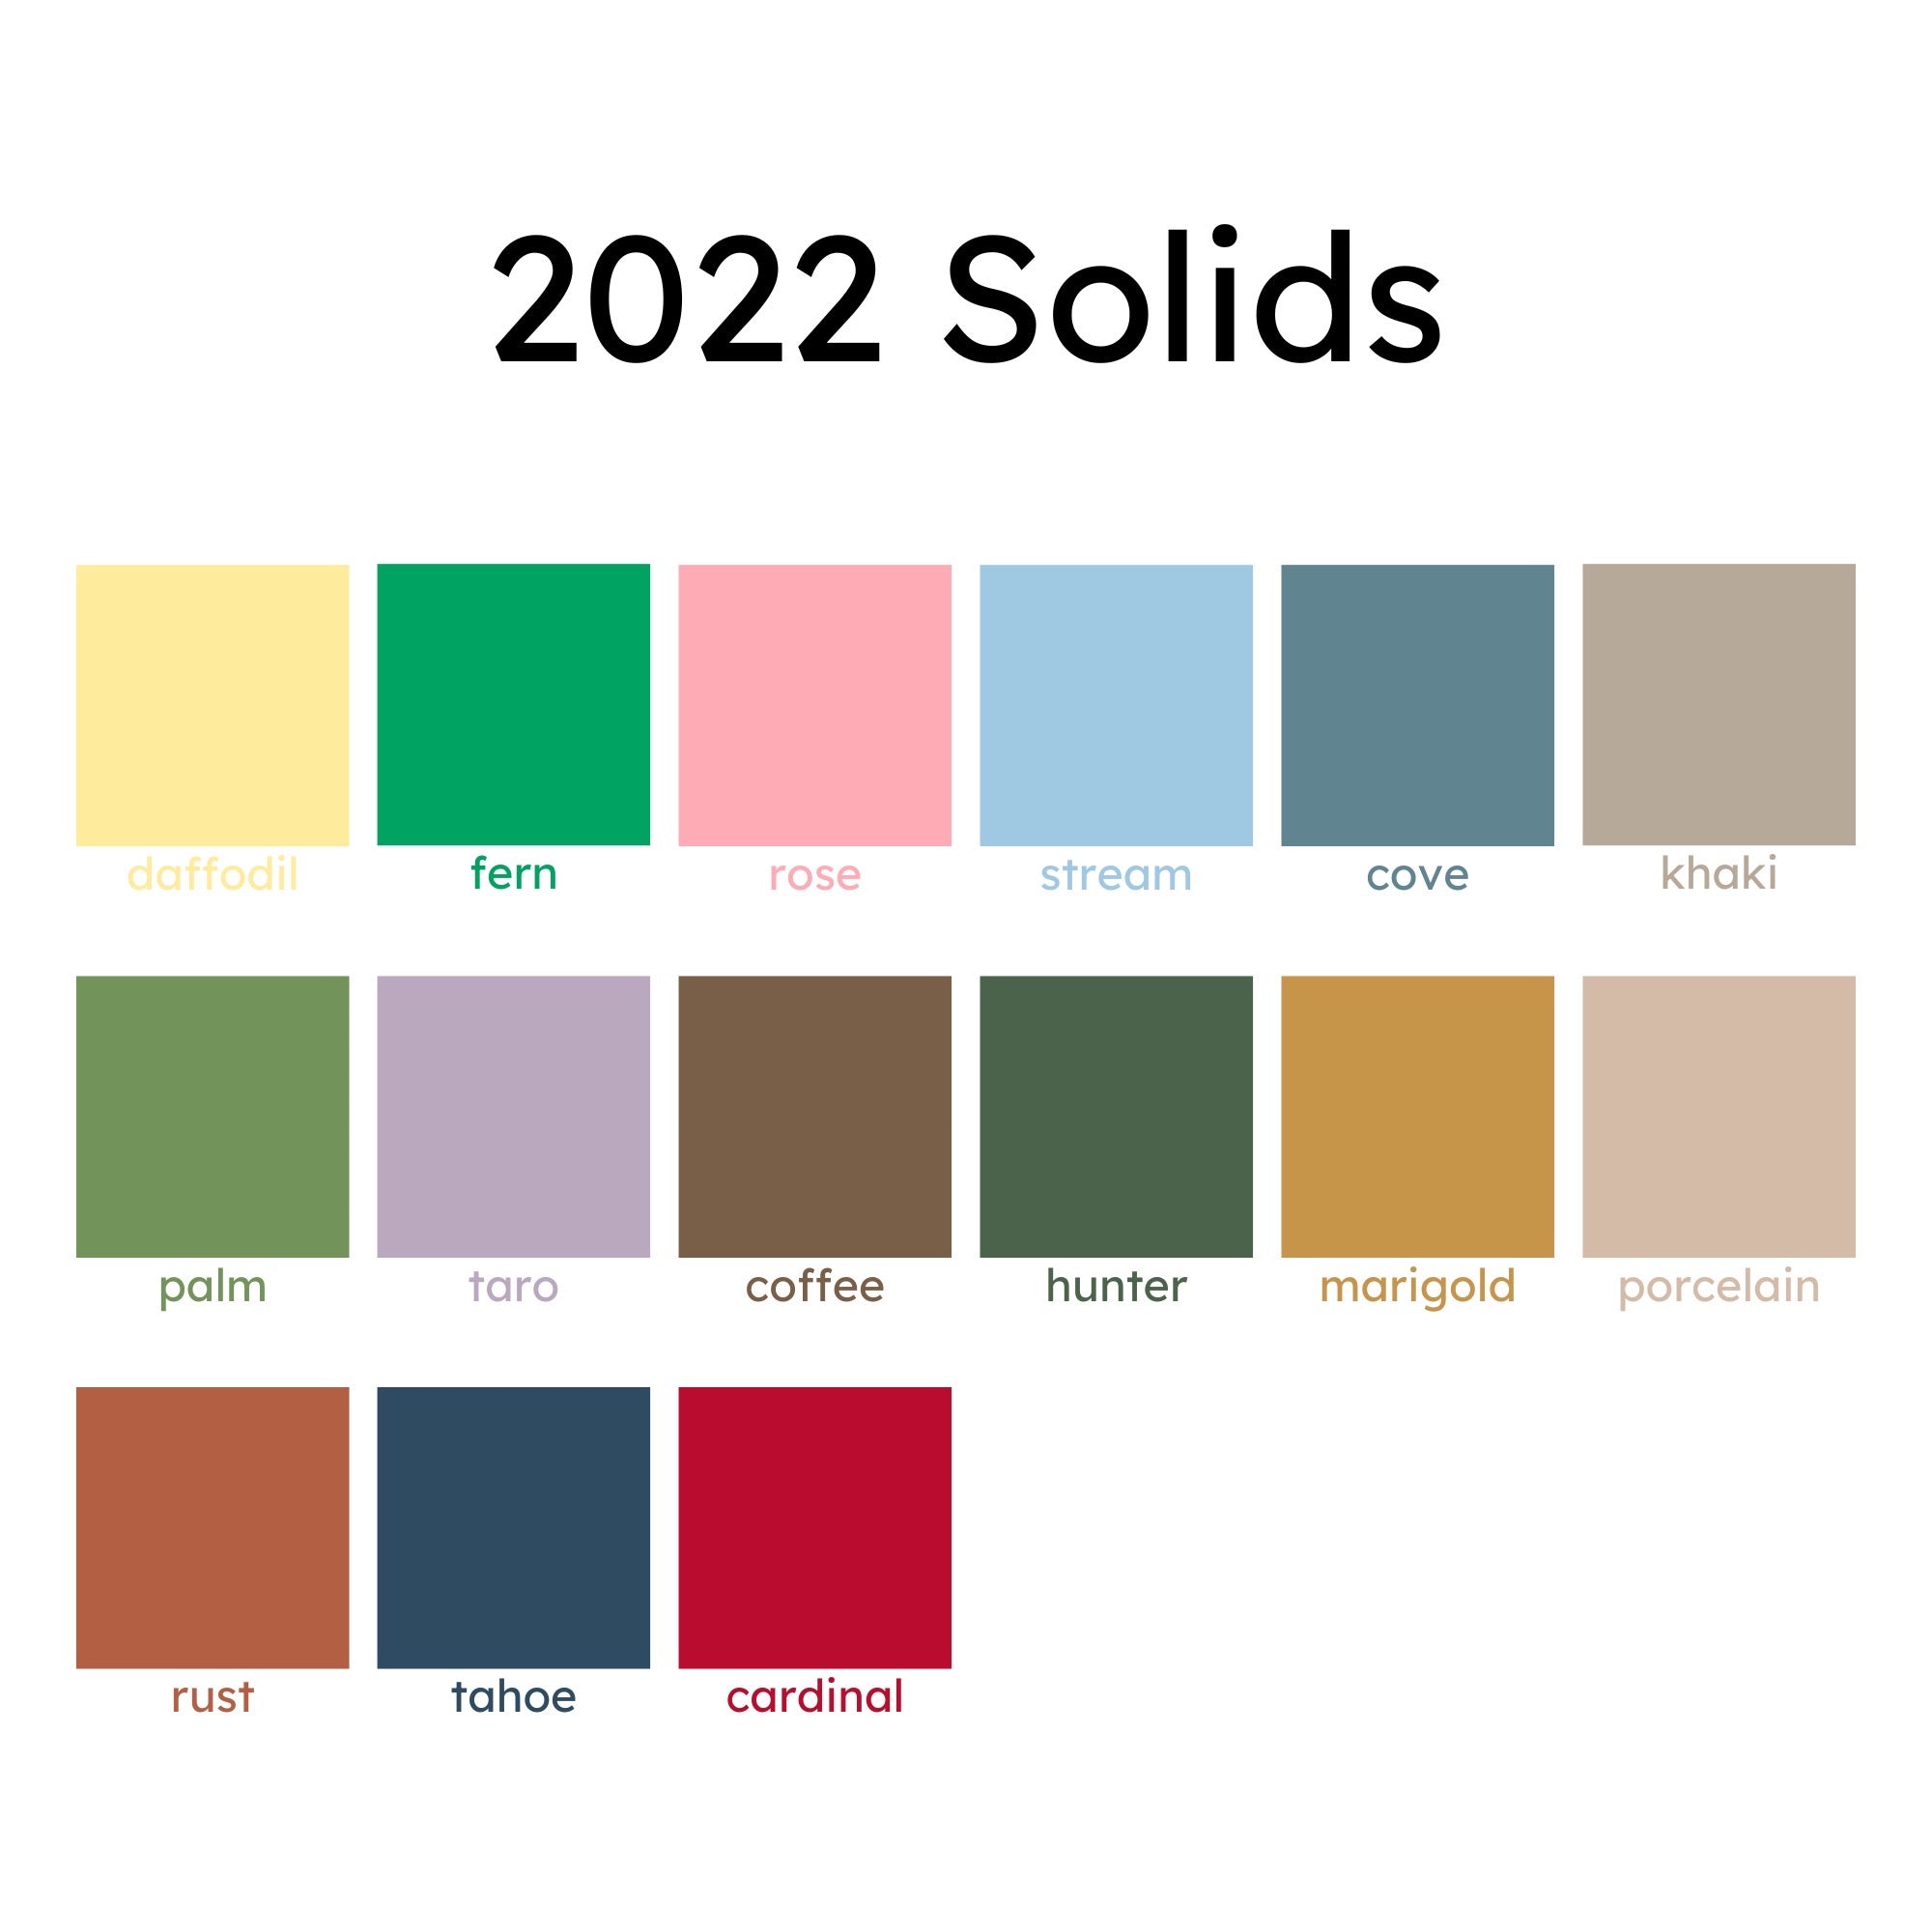 2022 solids